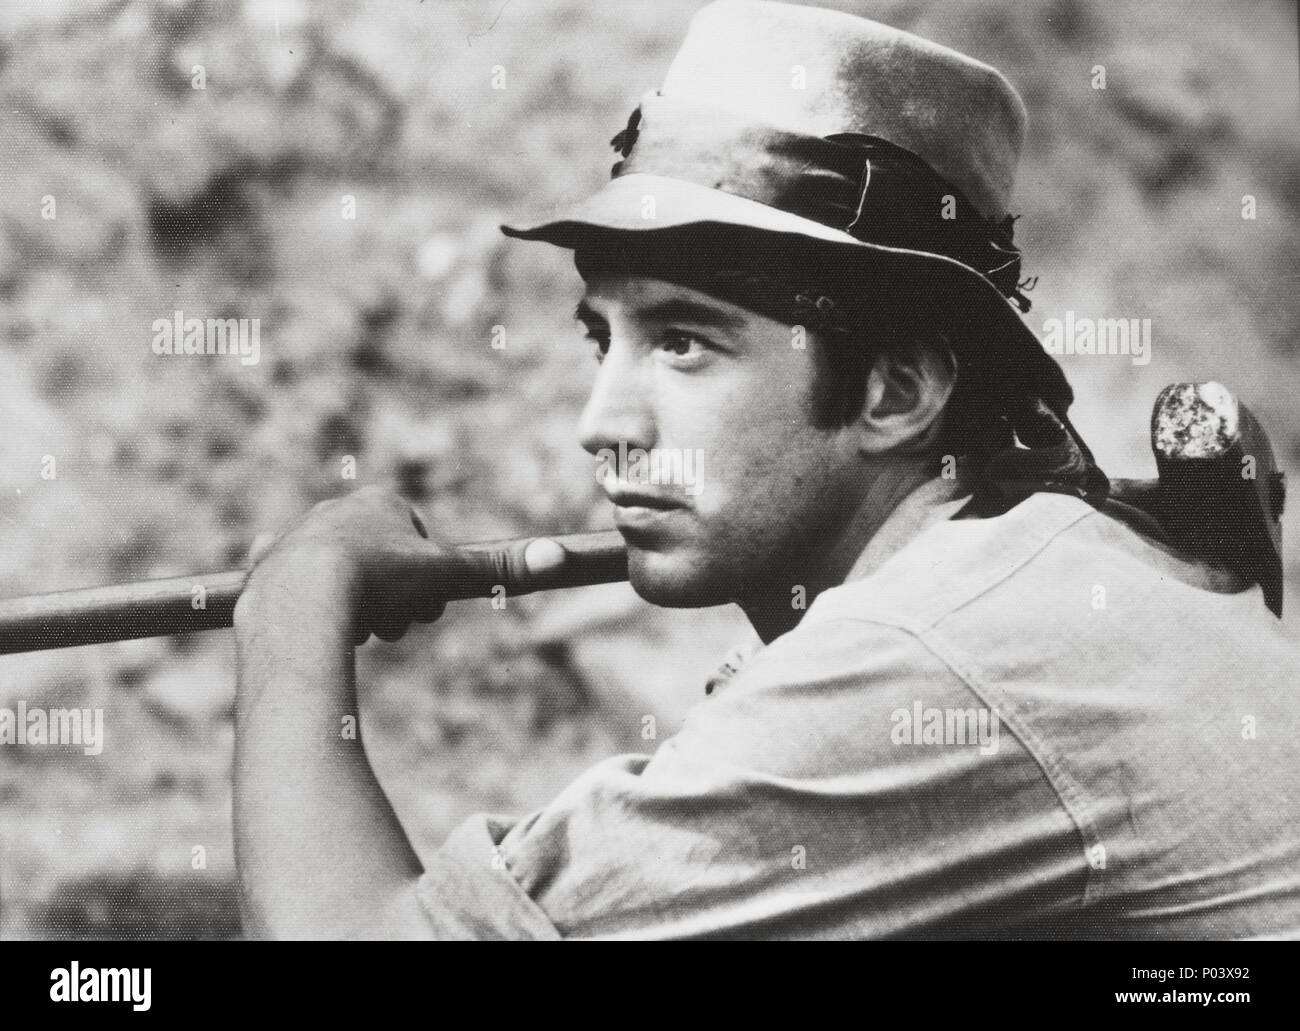 Original Film Title: JOE HILL.  English Title: THE BALLAD OF JOE HILL.  Film Director: BO WIDERBERG.  Year: 1971. Credit: BO WIDERBERG FILM / Album Stock Photo